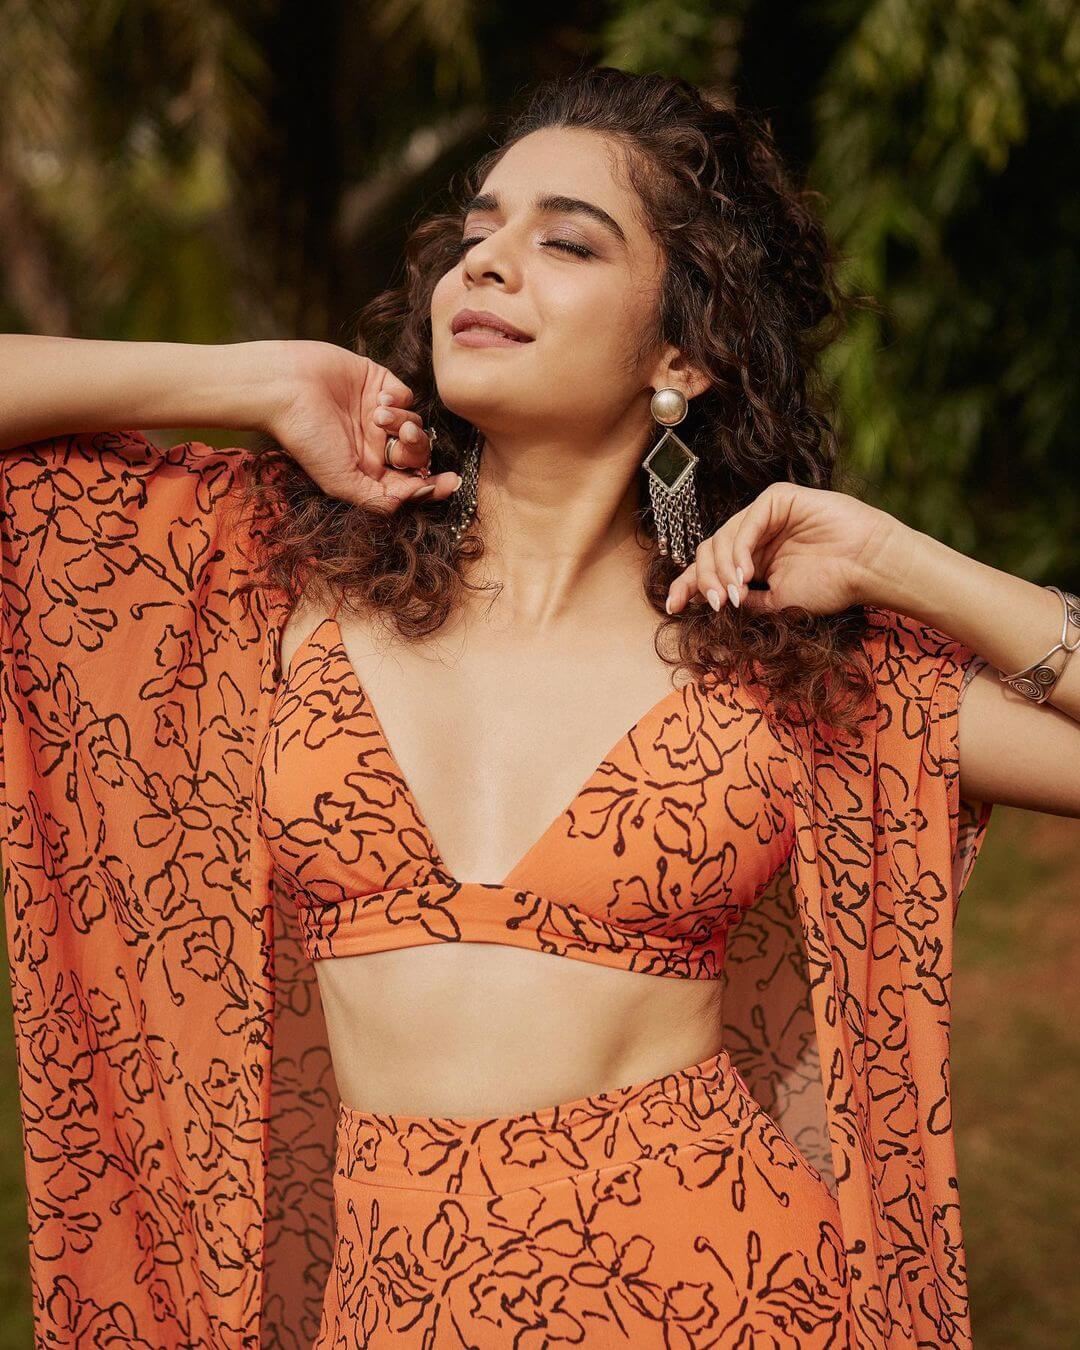 Mithila Palkar’s Refreshing Look in the Orange Co-ord Set